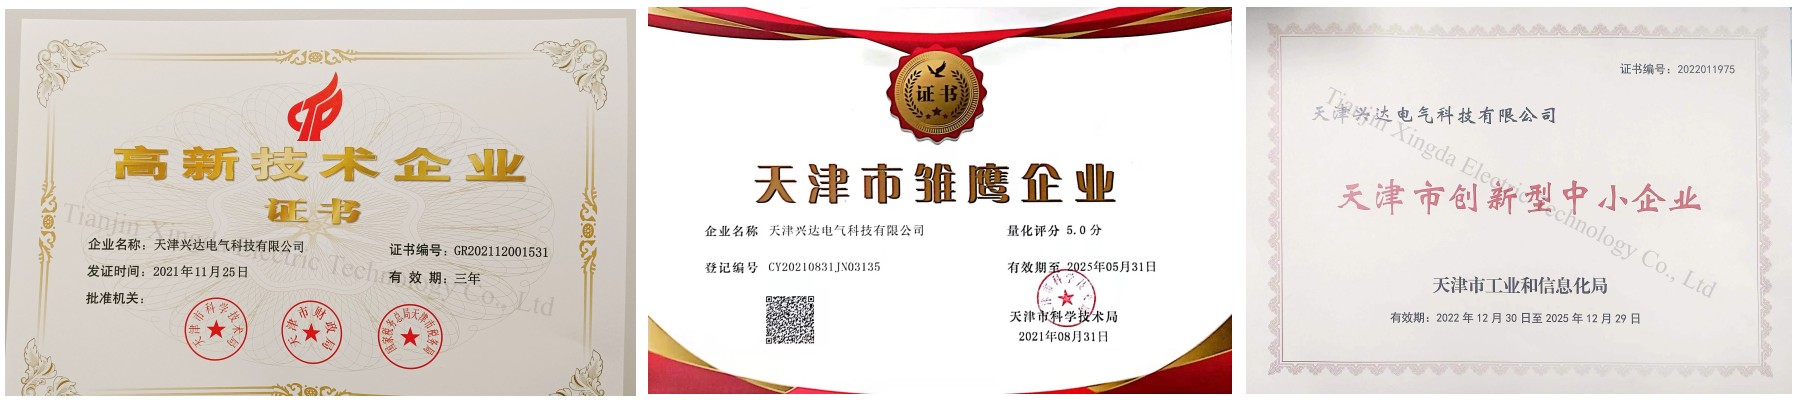 Awarded Certificate